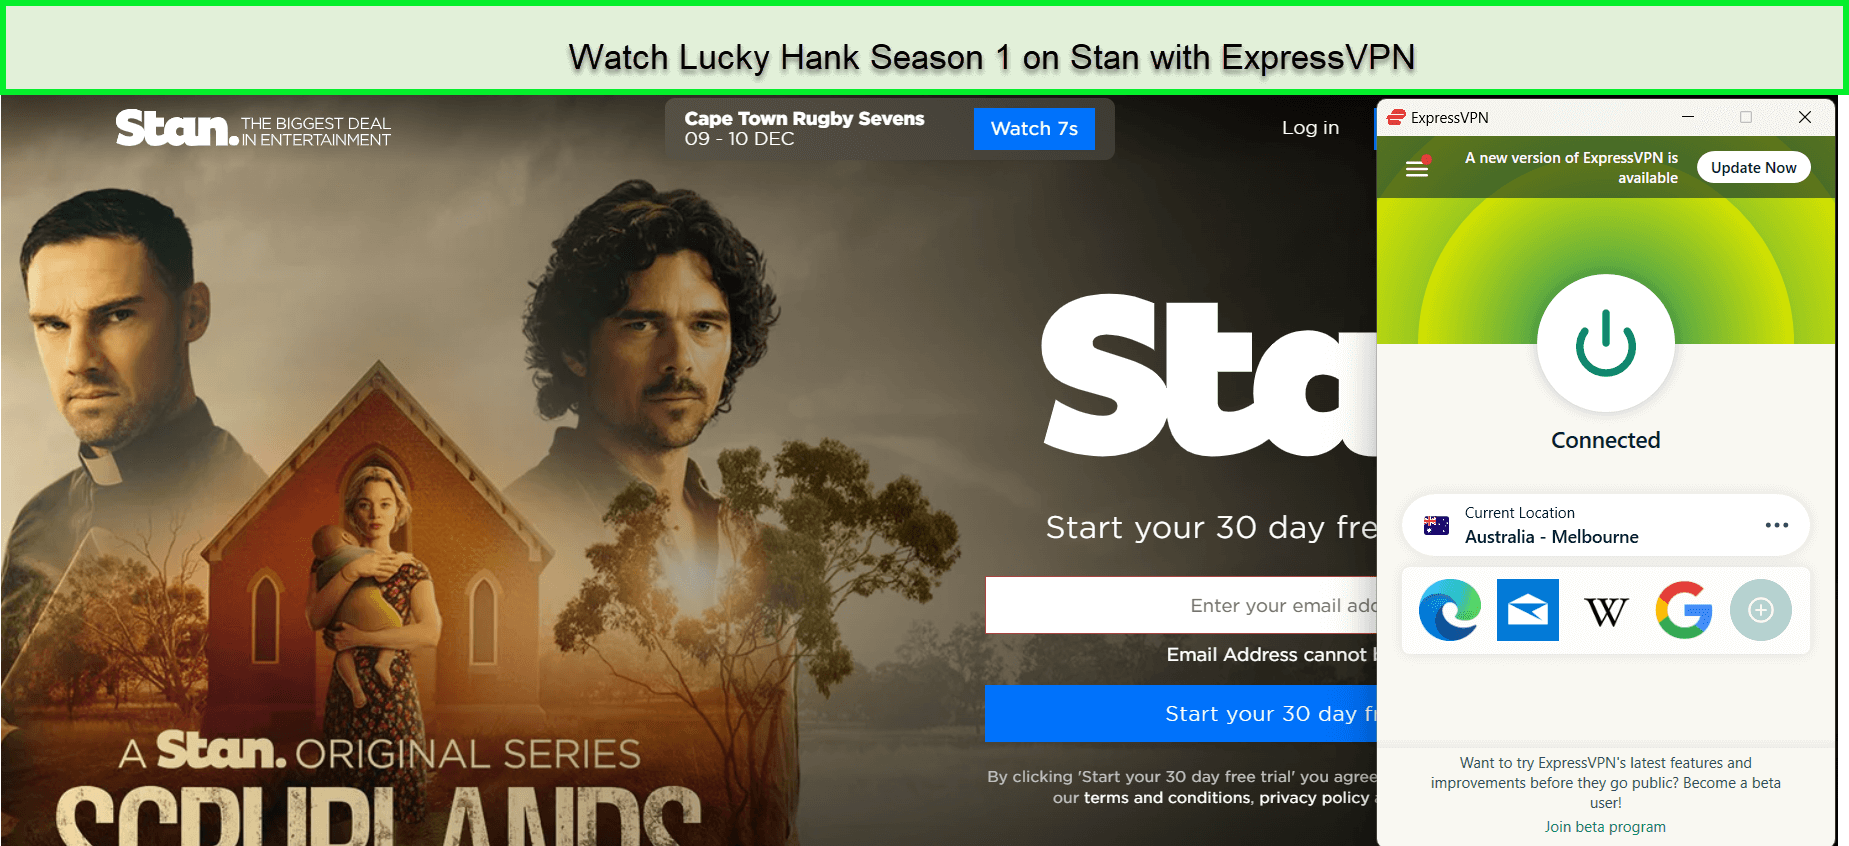 Watch-Lucky-Hank-Season-1-in-Italy-on-Stan